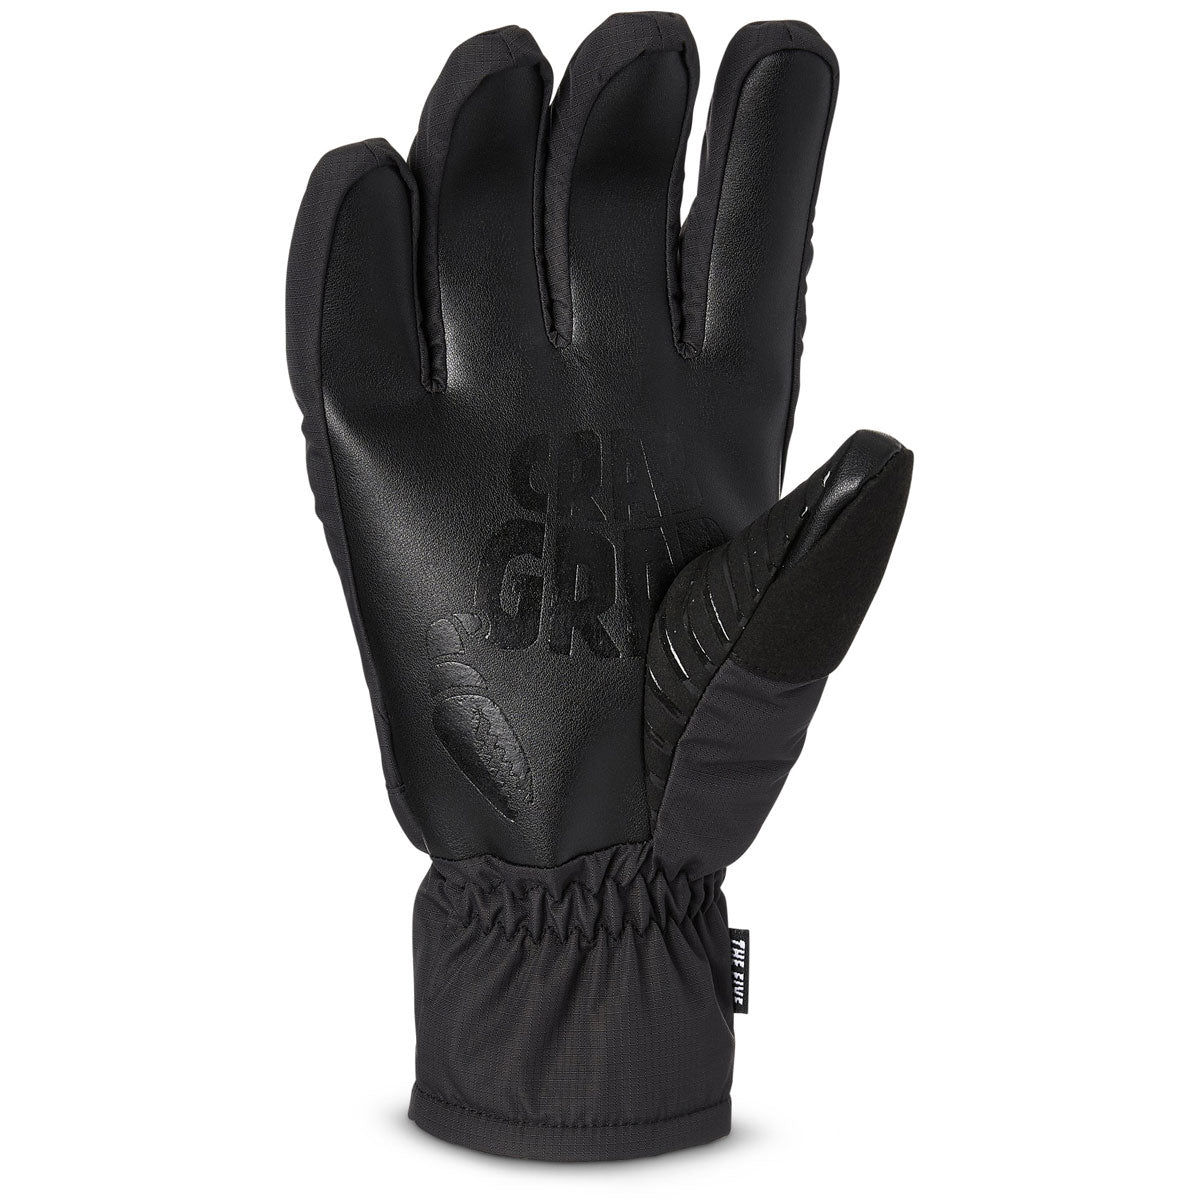 Crab Grab Five Snowboard Gloves - Black image 2